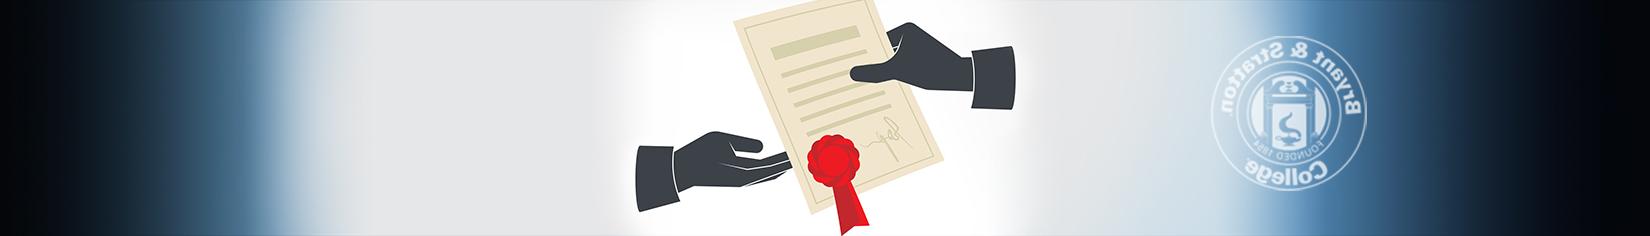 Animation of hands receiving certificate